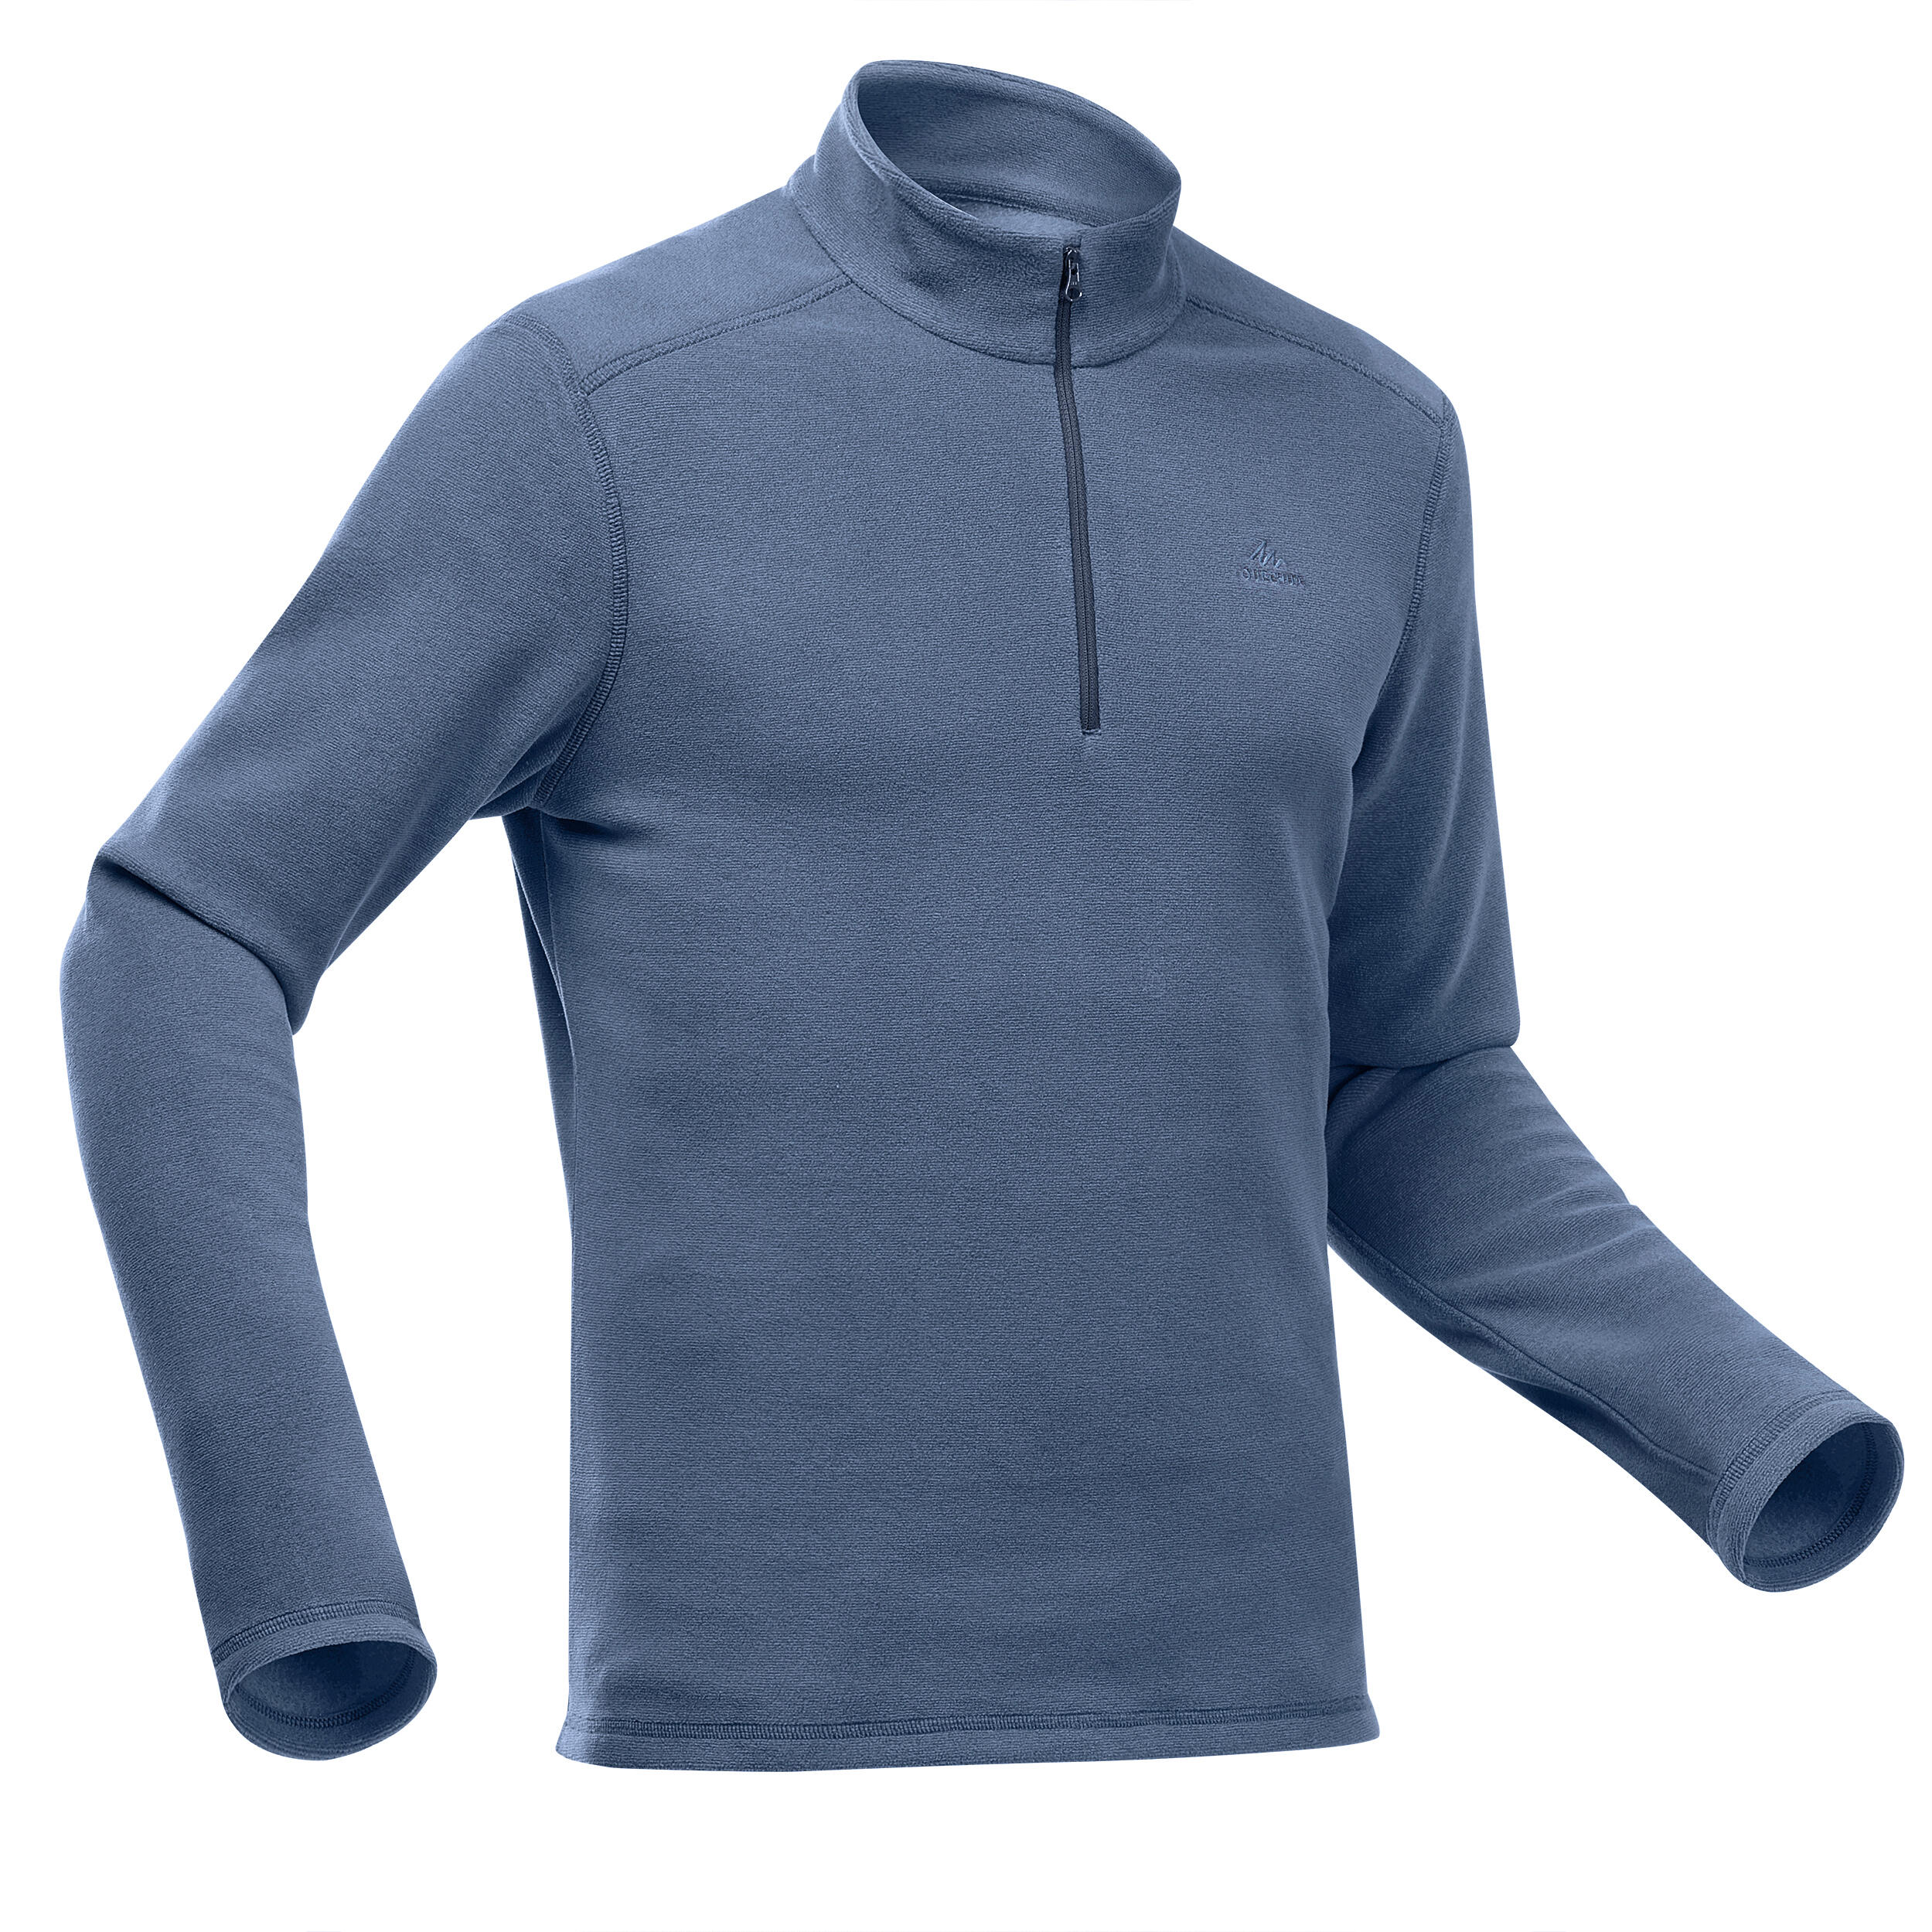 Men's Fleece Sweater - MH 100 Blue/Grey - Navy blue, Whale grey